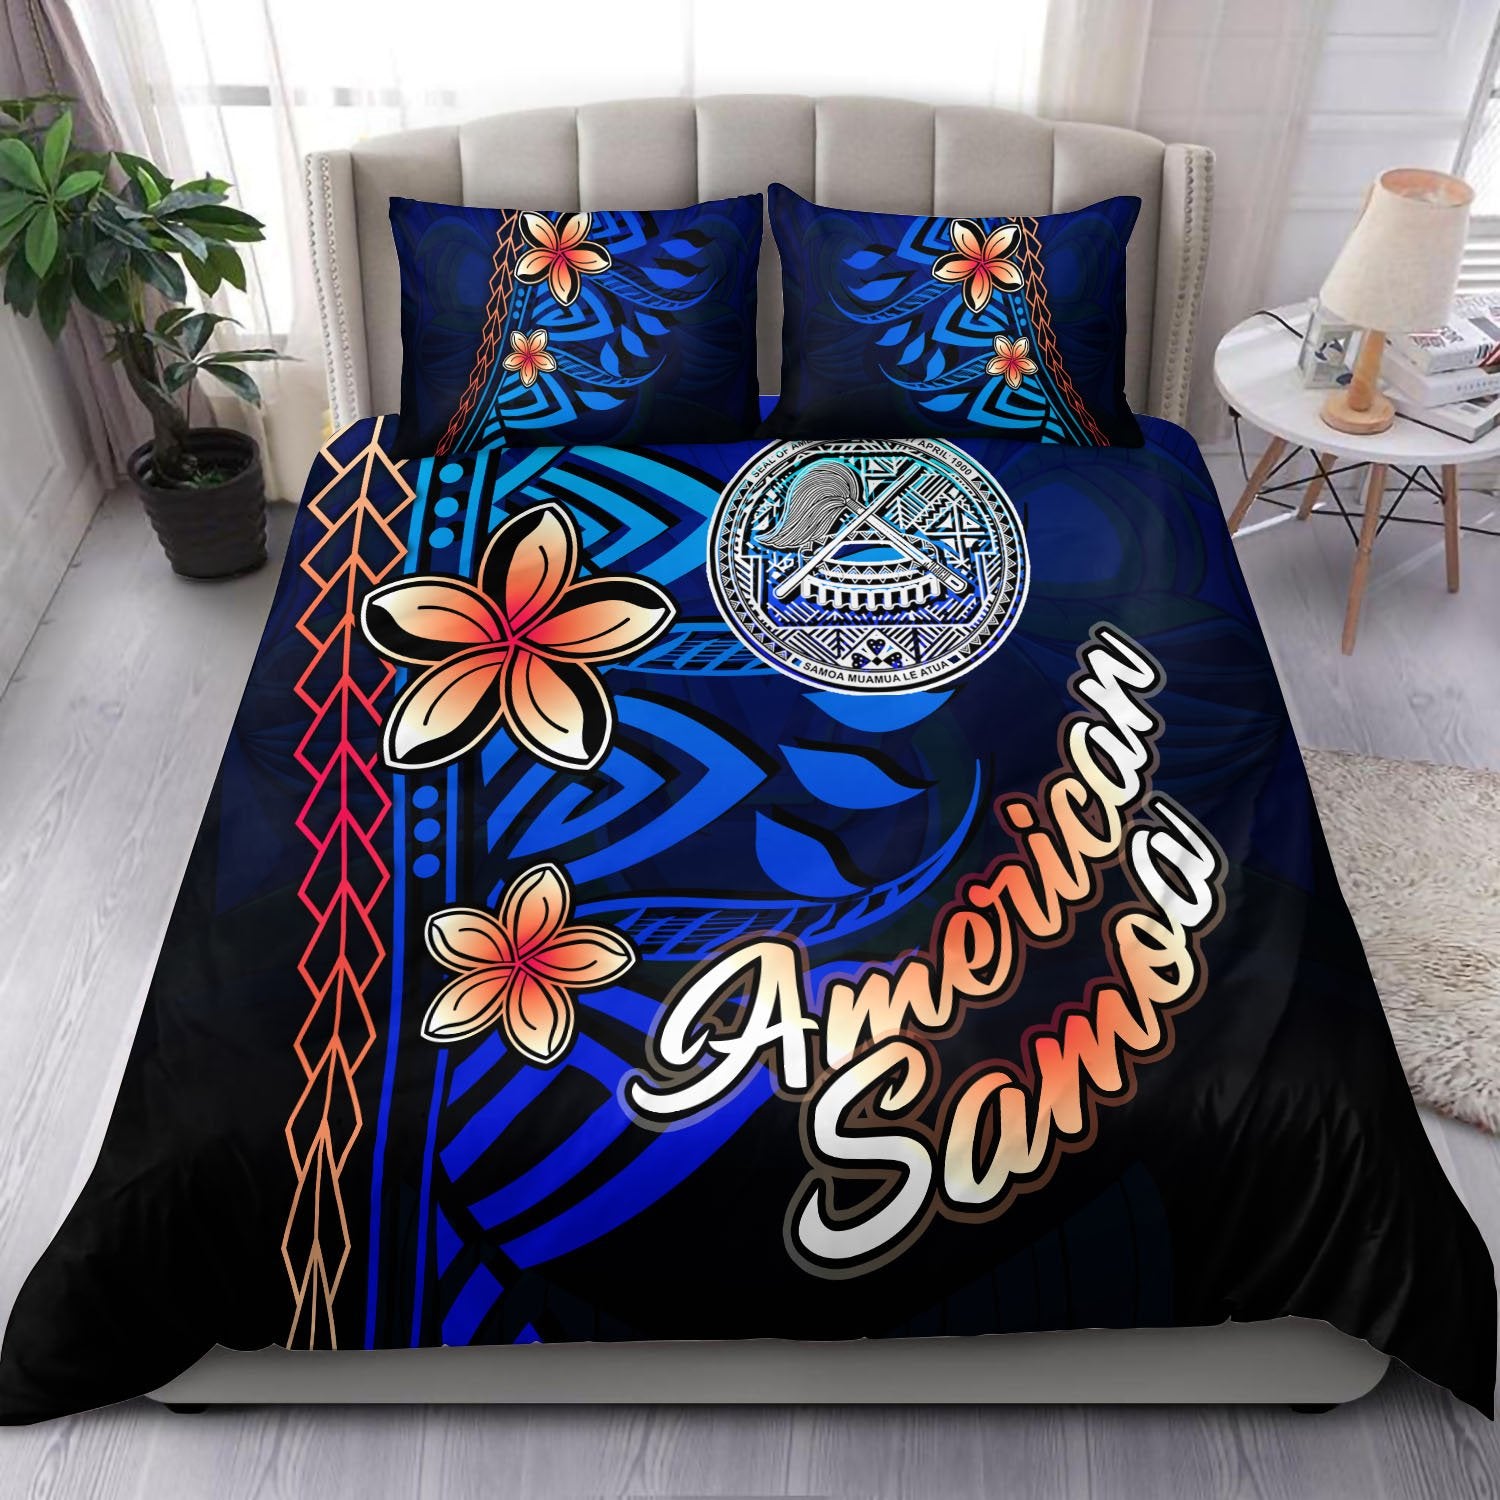 American Samoa Bedding Set - Vintage Tribal Mountain Blue - Polynesian Pride